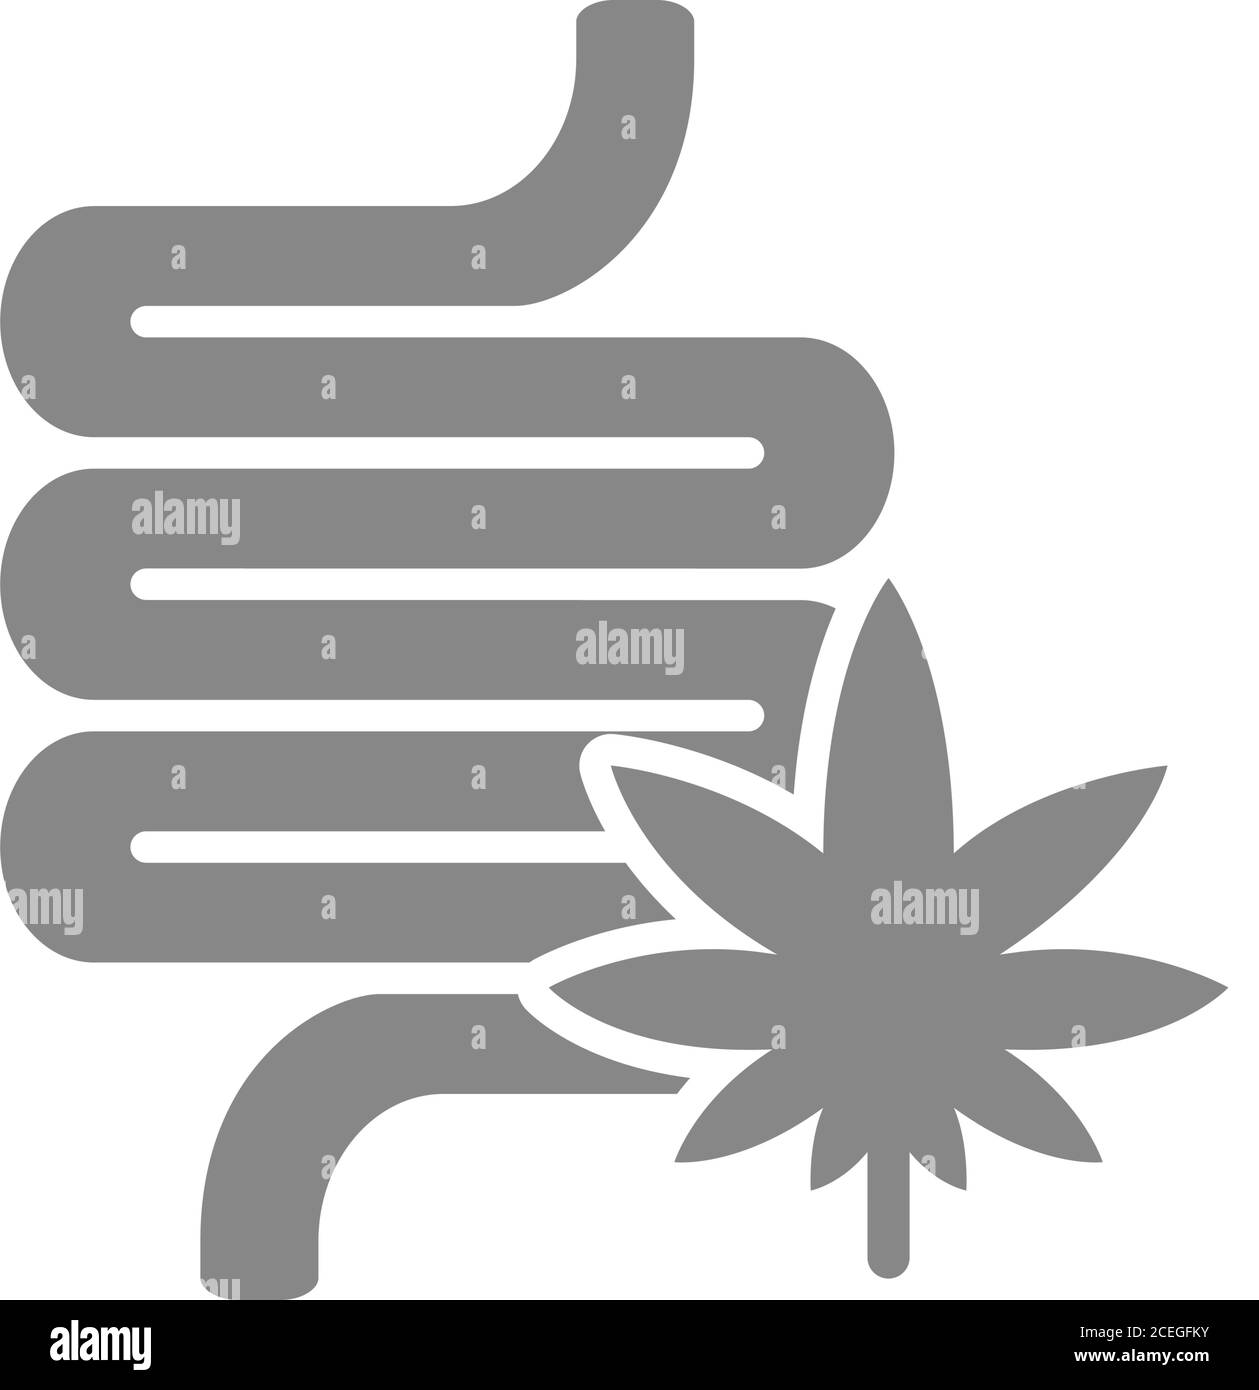 Human intestine with marijuana grey icon. Cannabis symbol. Stock Vector